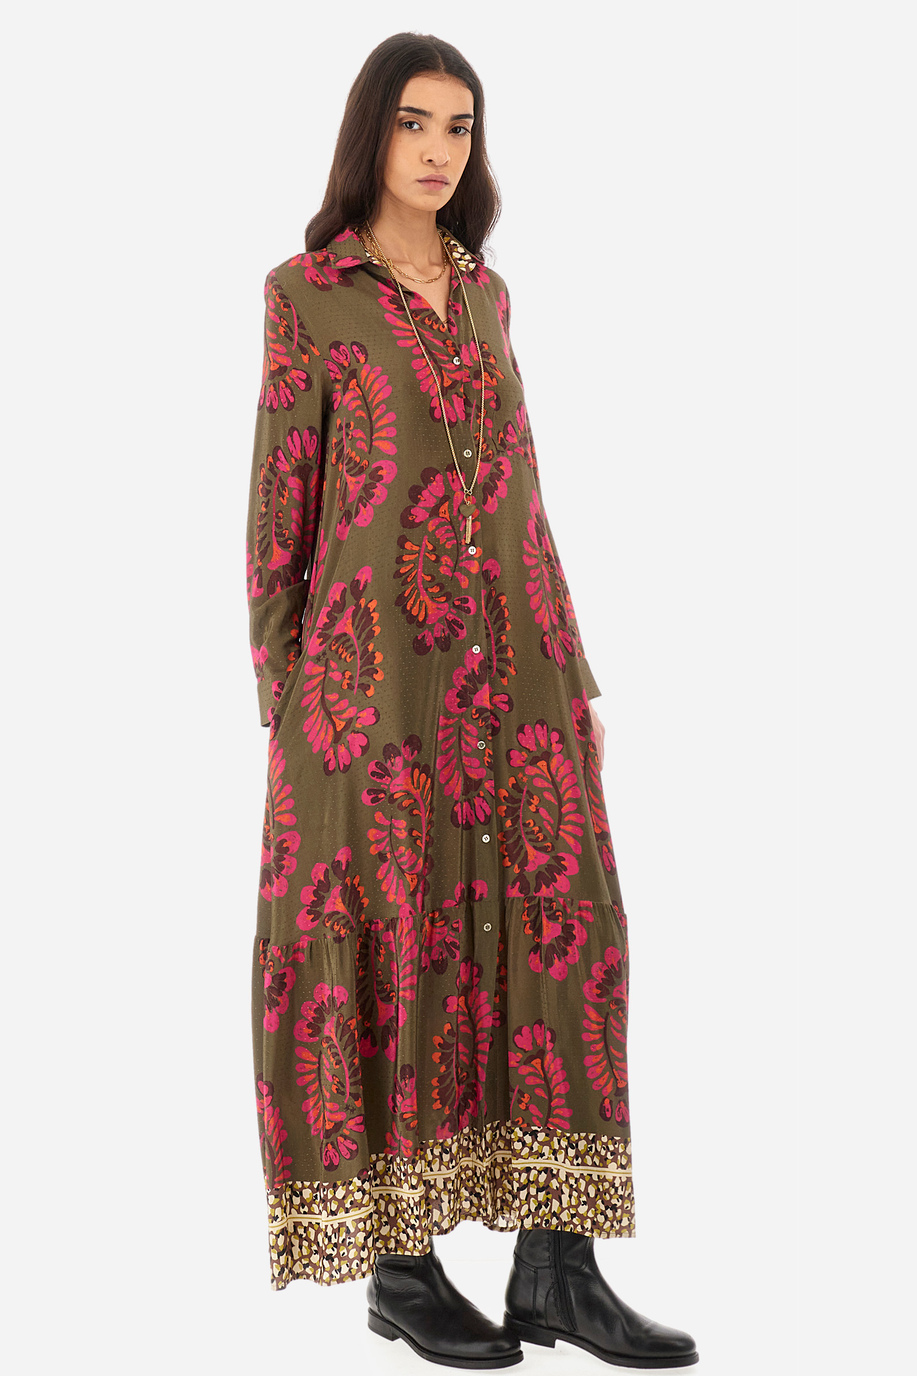 Robe coupe classique en tissu synthétique - Yasmeena - Robes | La Martina - Official Online Shop